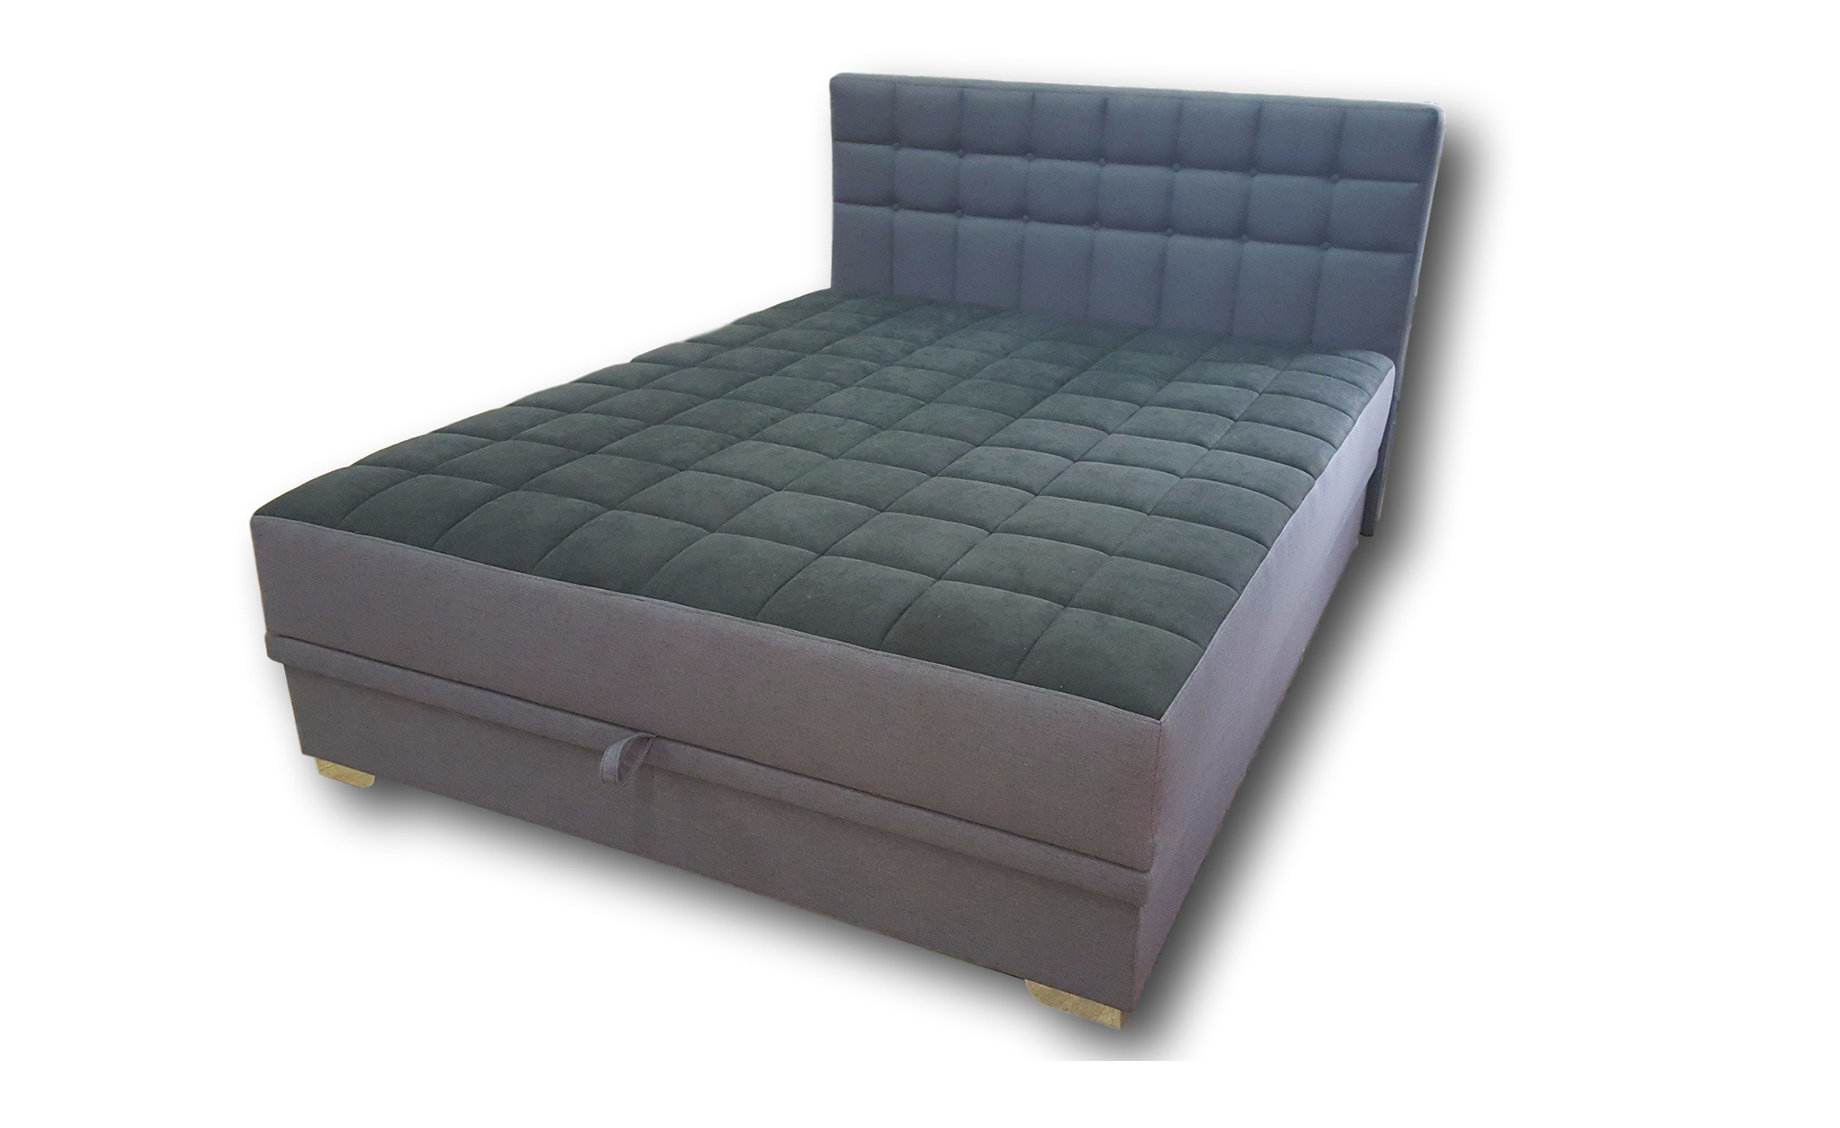 London francuski krevet sa spremnikom 180x215x110 cm sivi